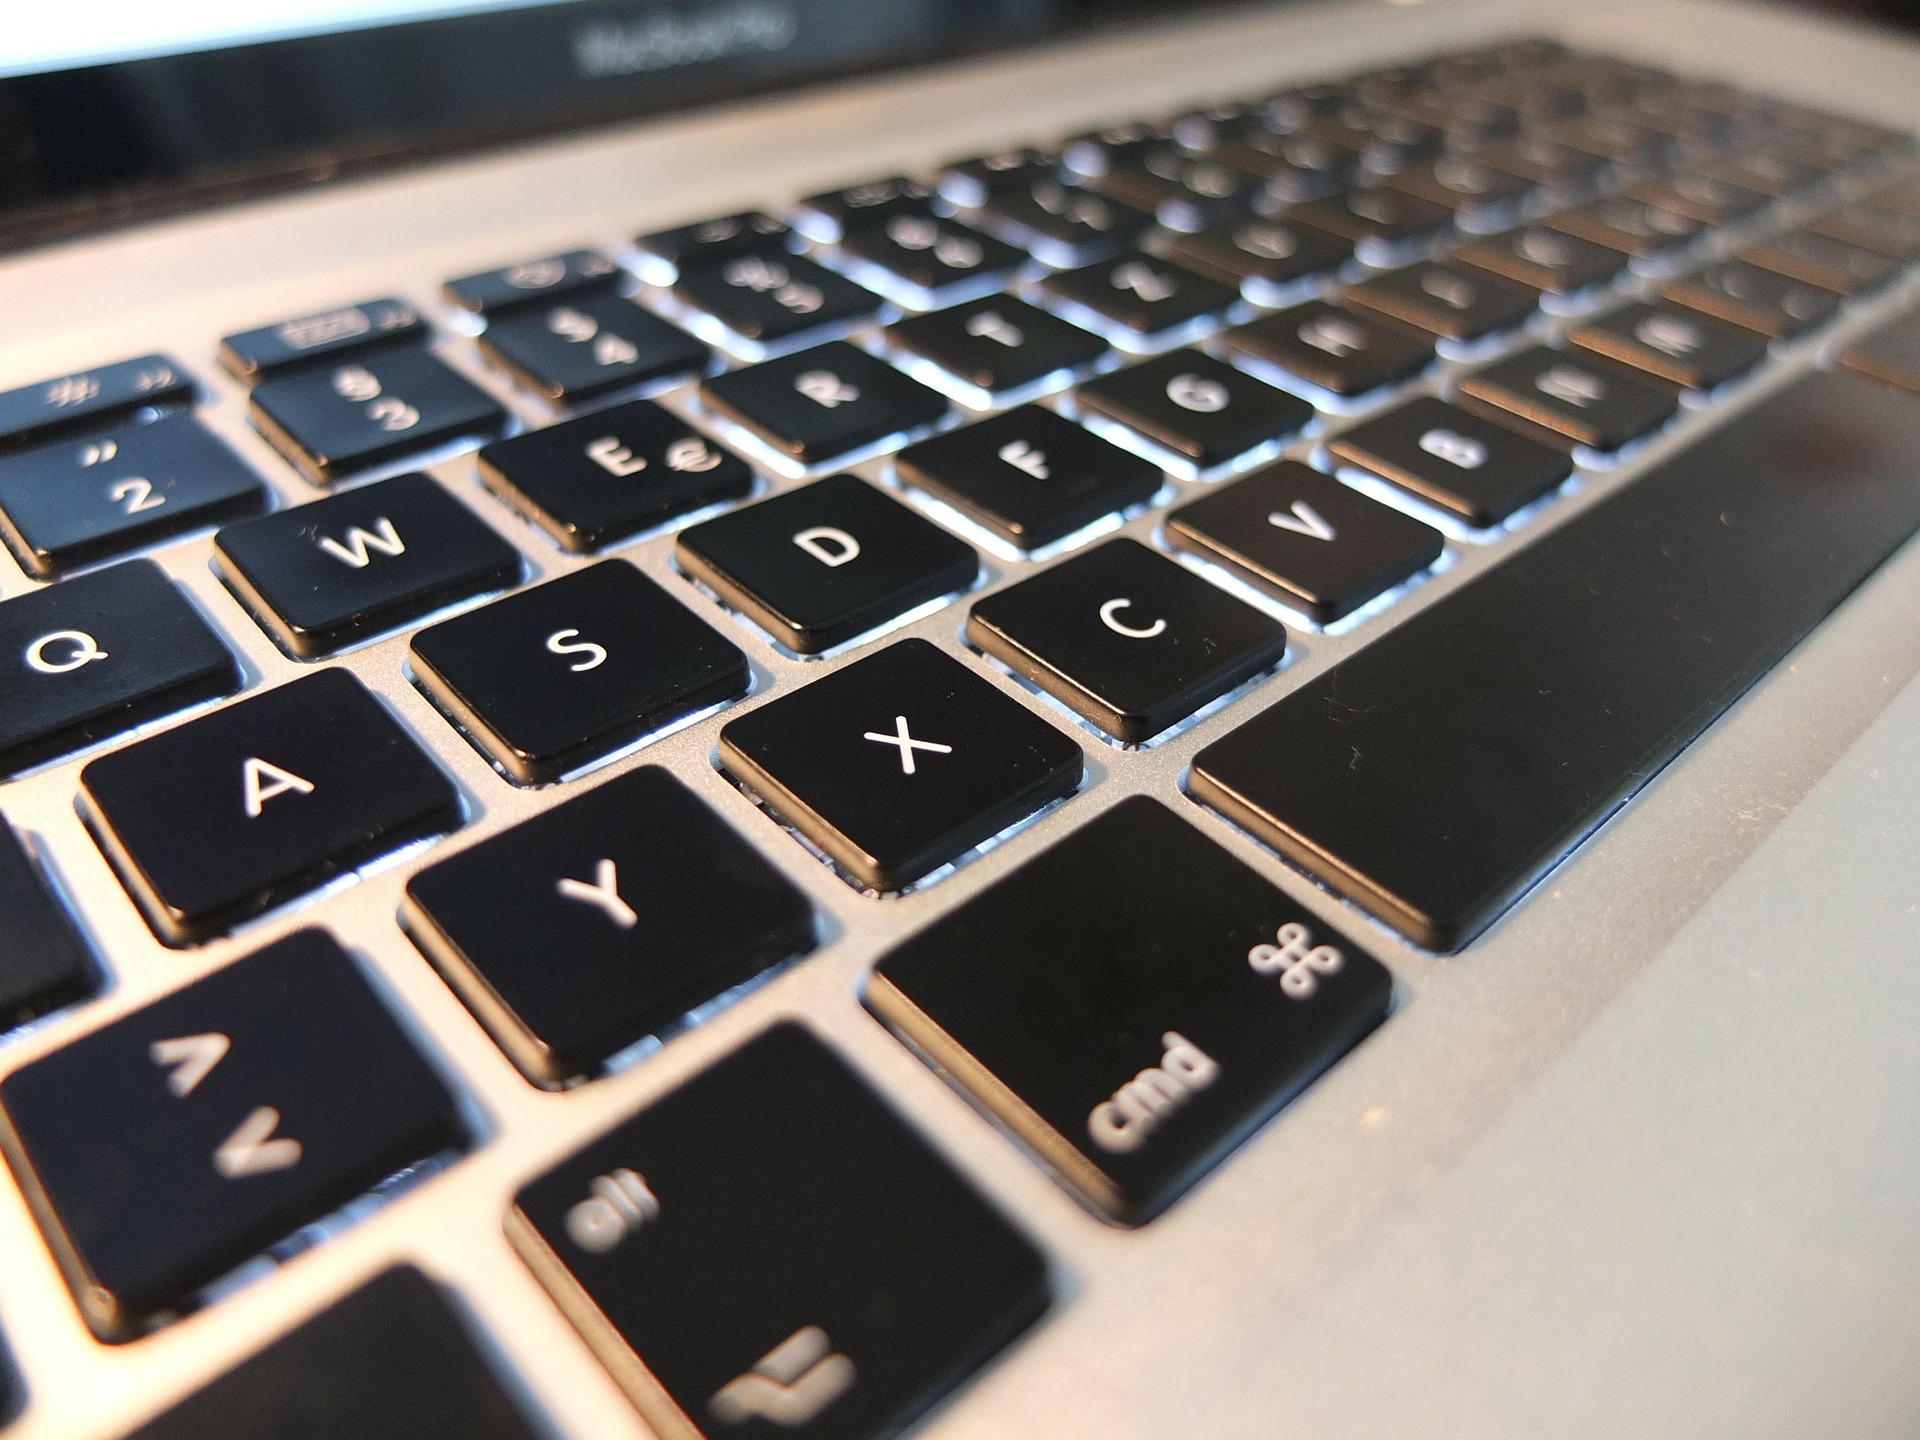 Close up image of laptop